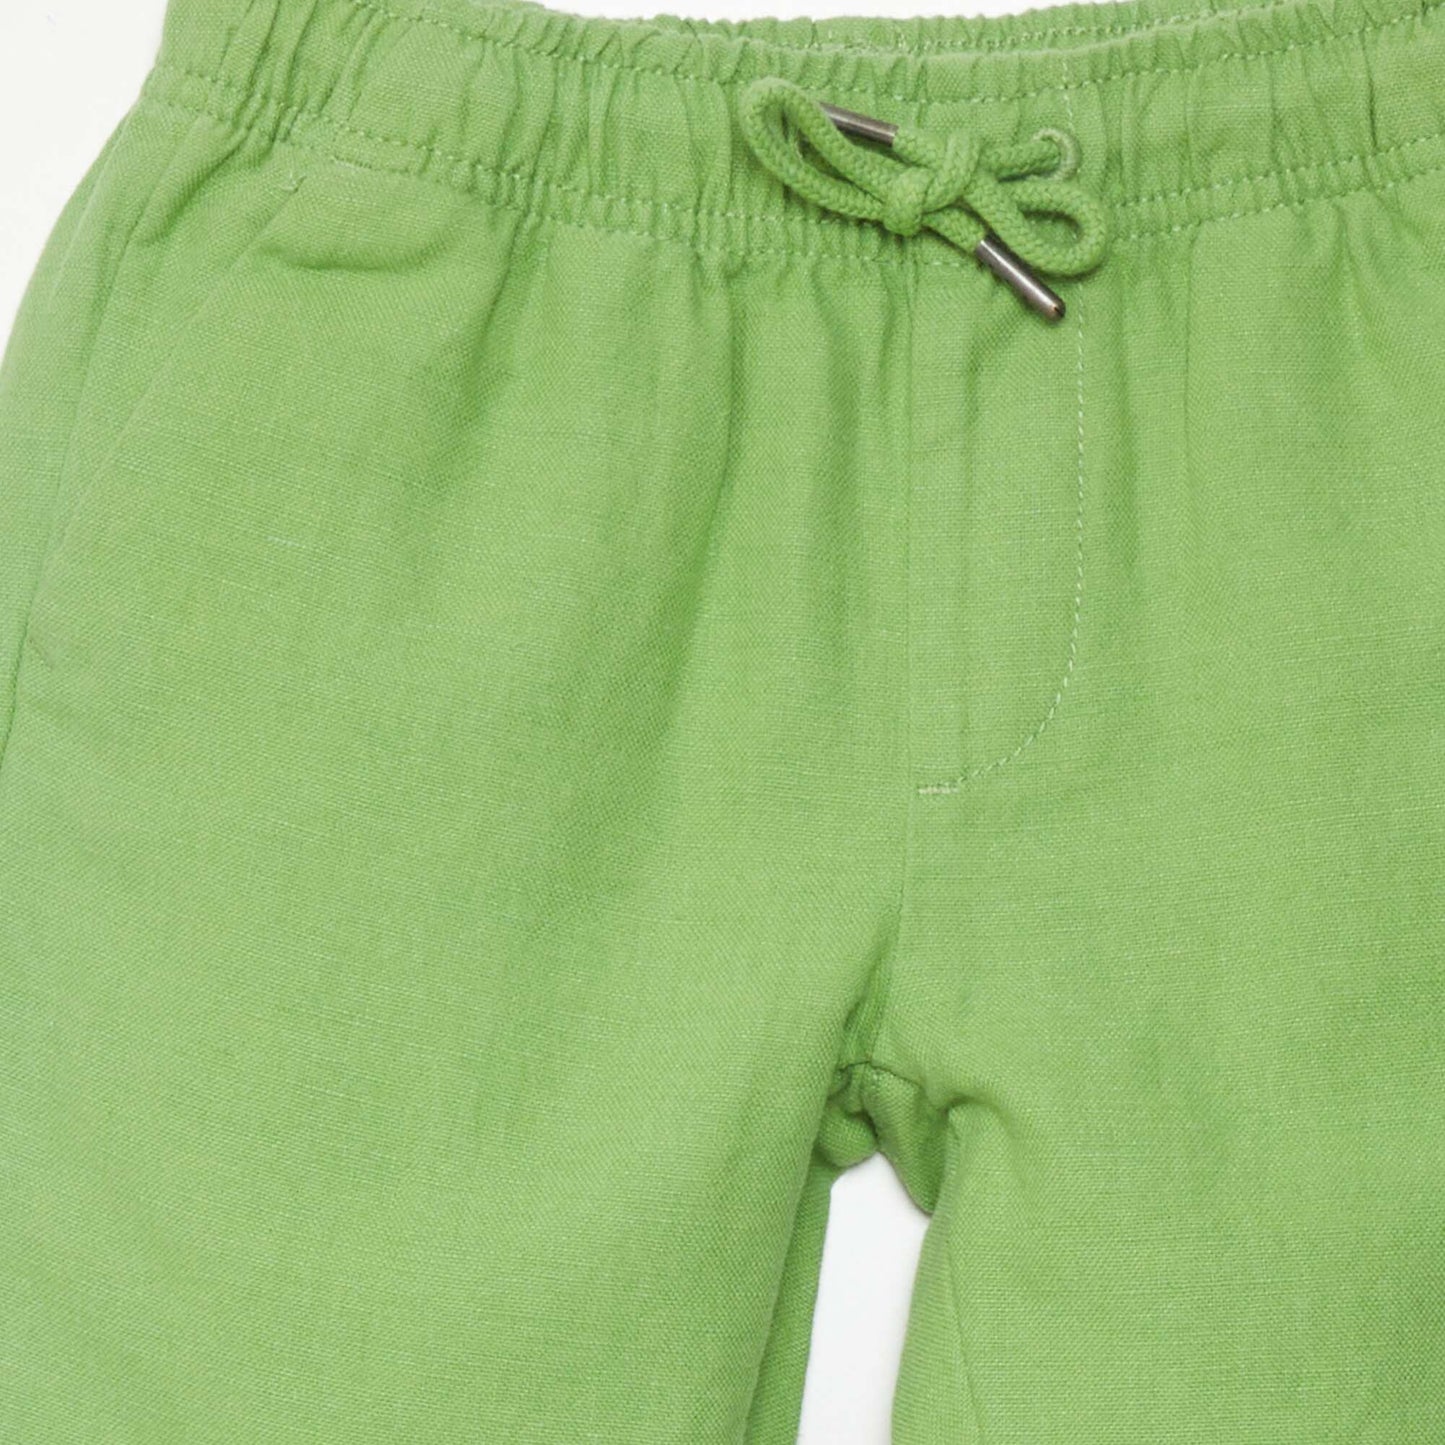 Pantalon léger Vert